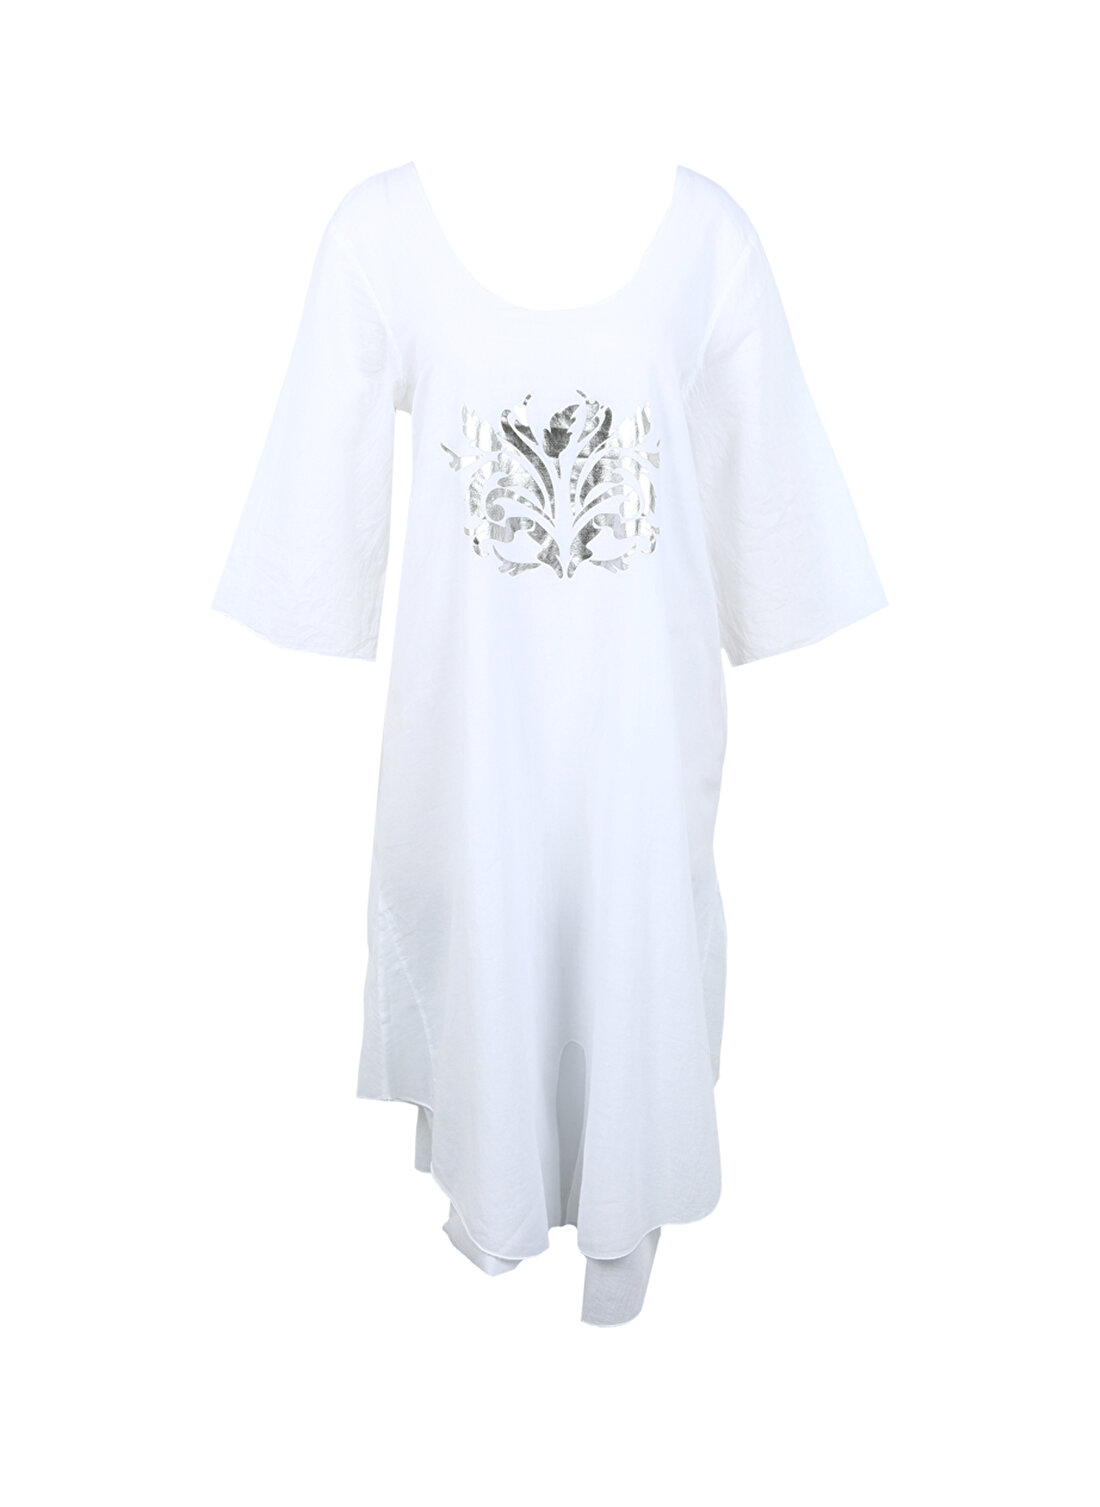  White by Nature Beyaz Kadın Midi Plaj Elbisesi 314706